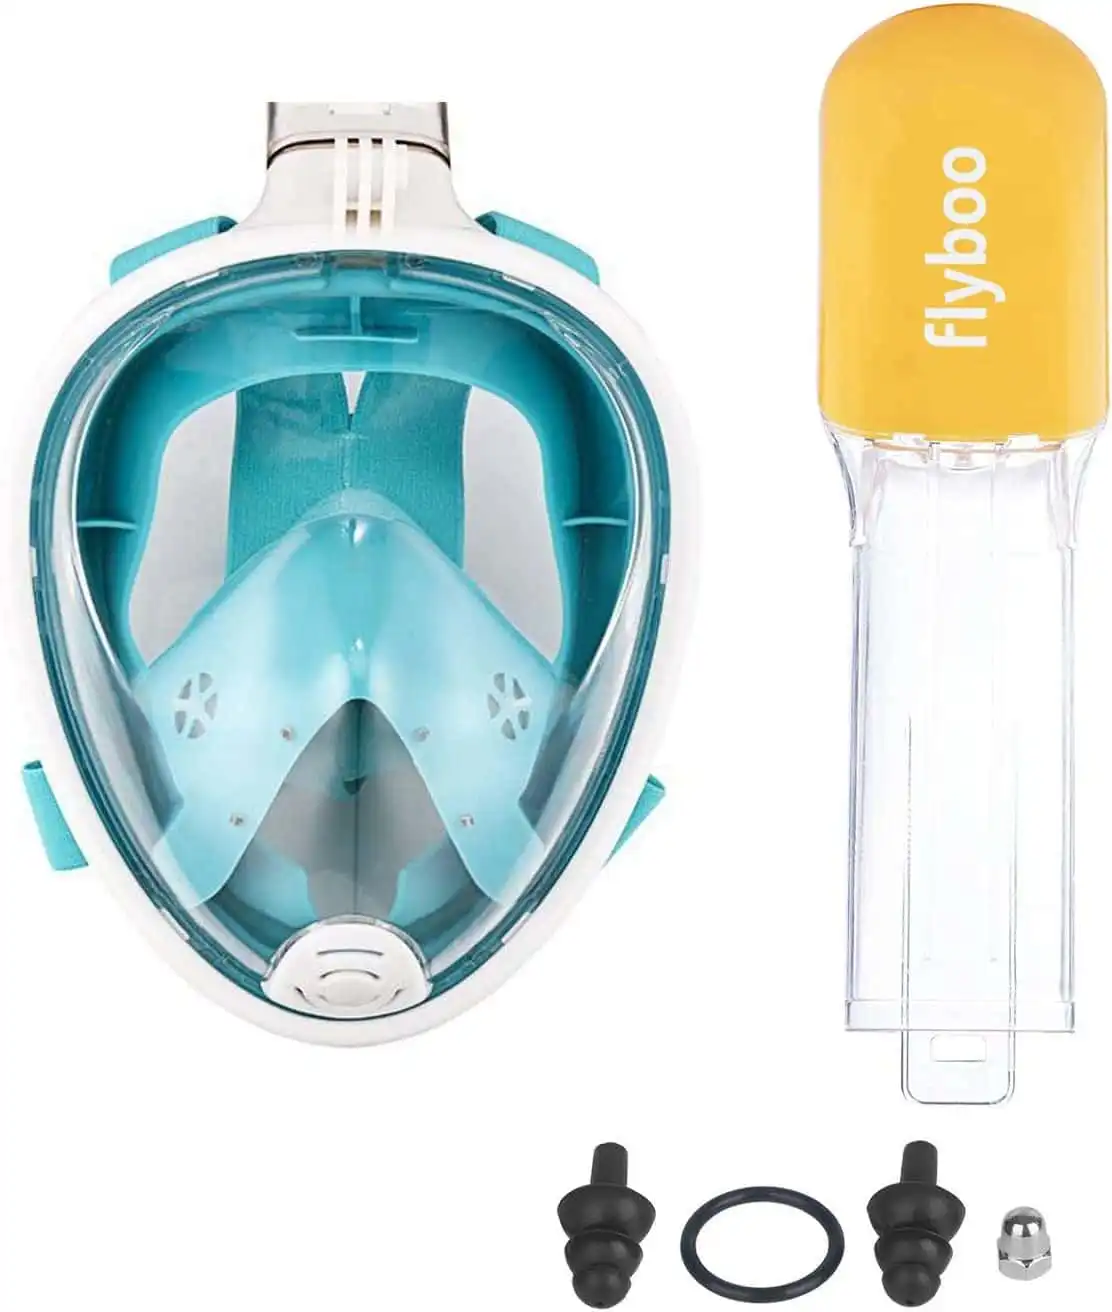 BLUUXIN Diving Mask Snorkeling Mask Full Face Mask,180 Degree View Panoramic Full Face Design